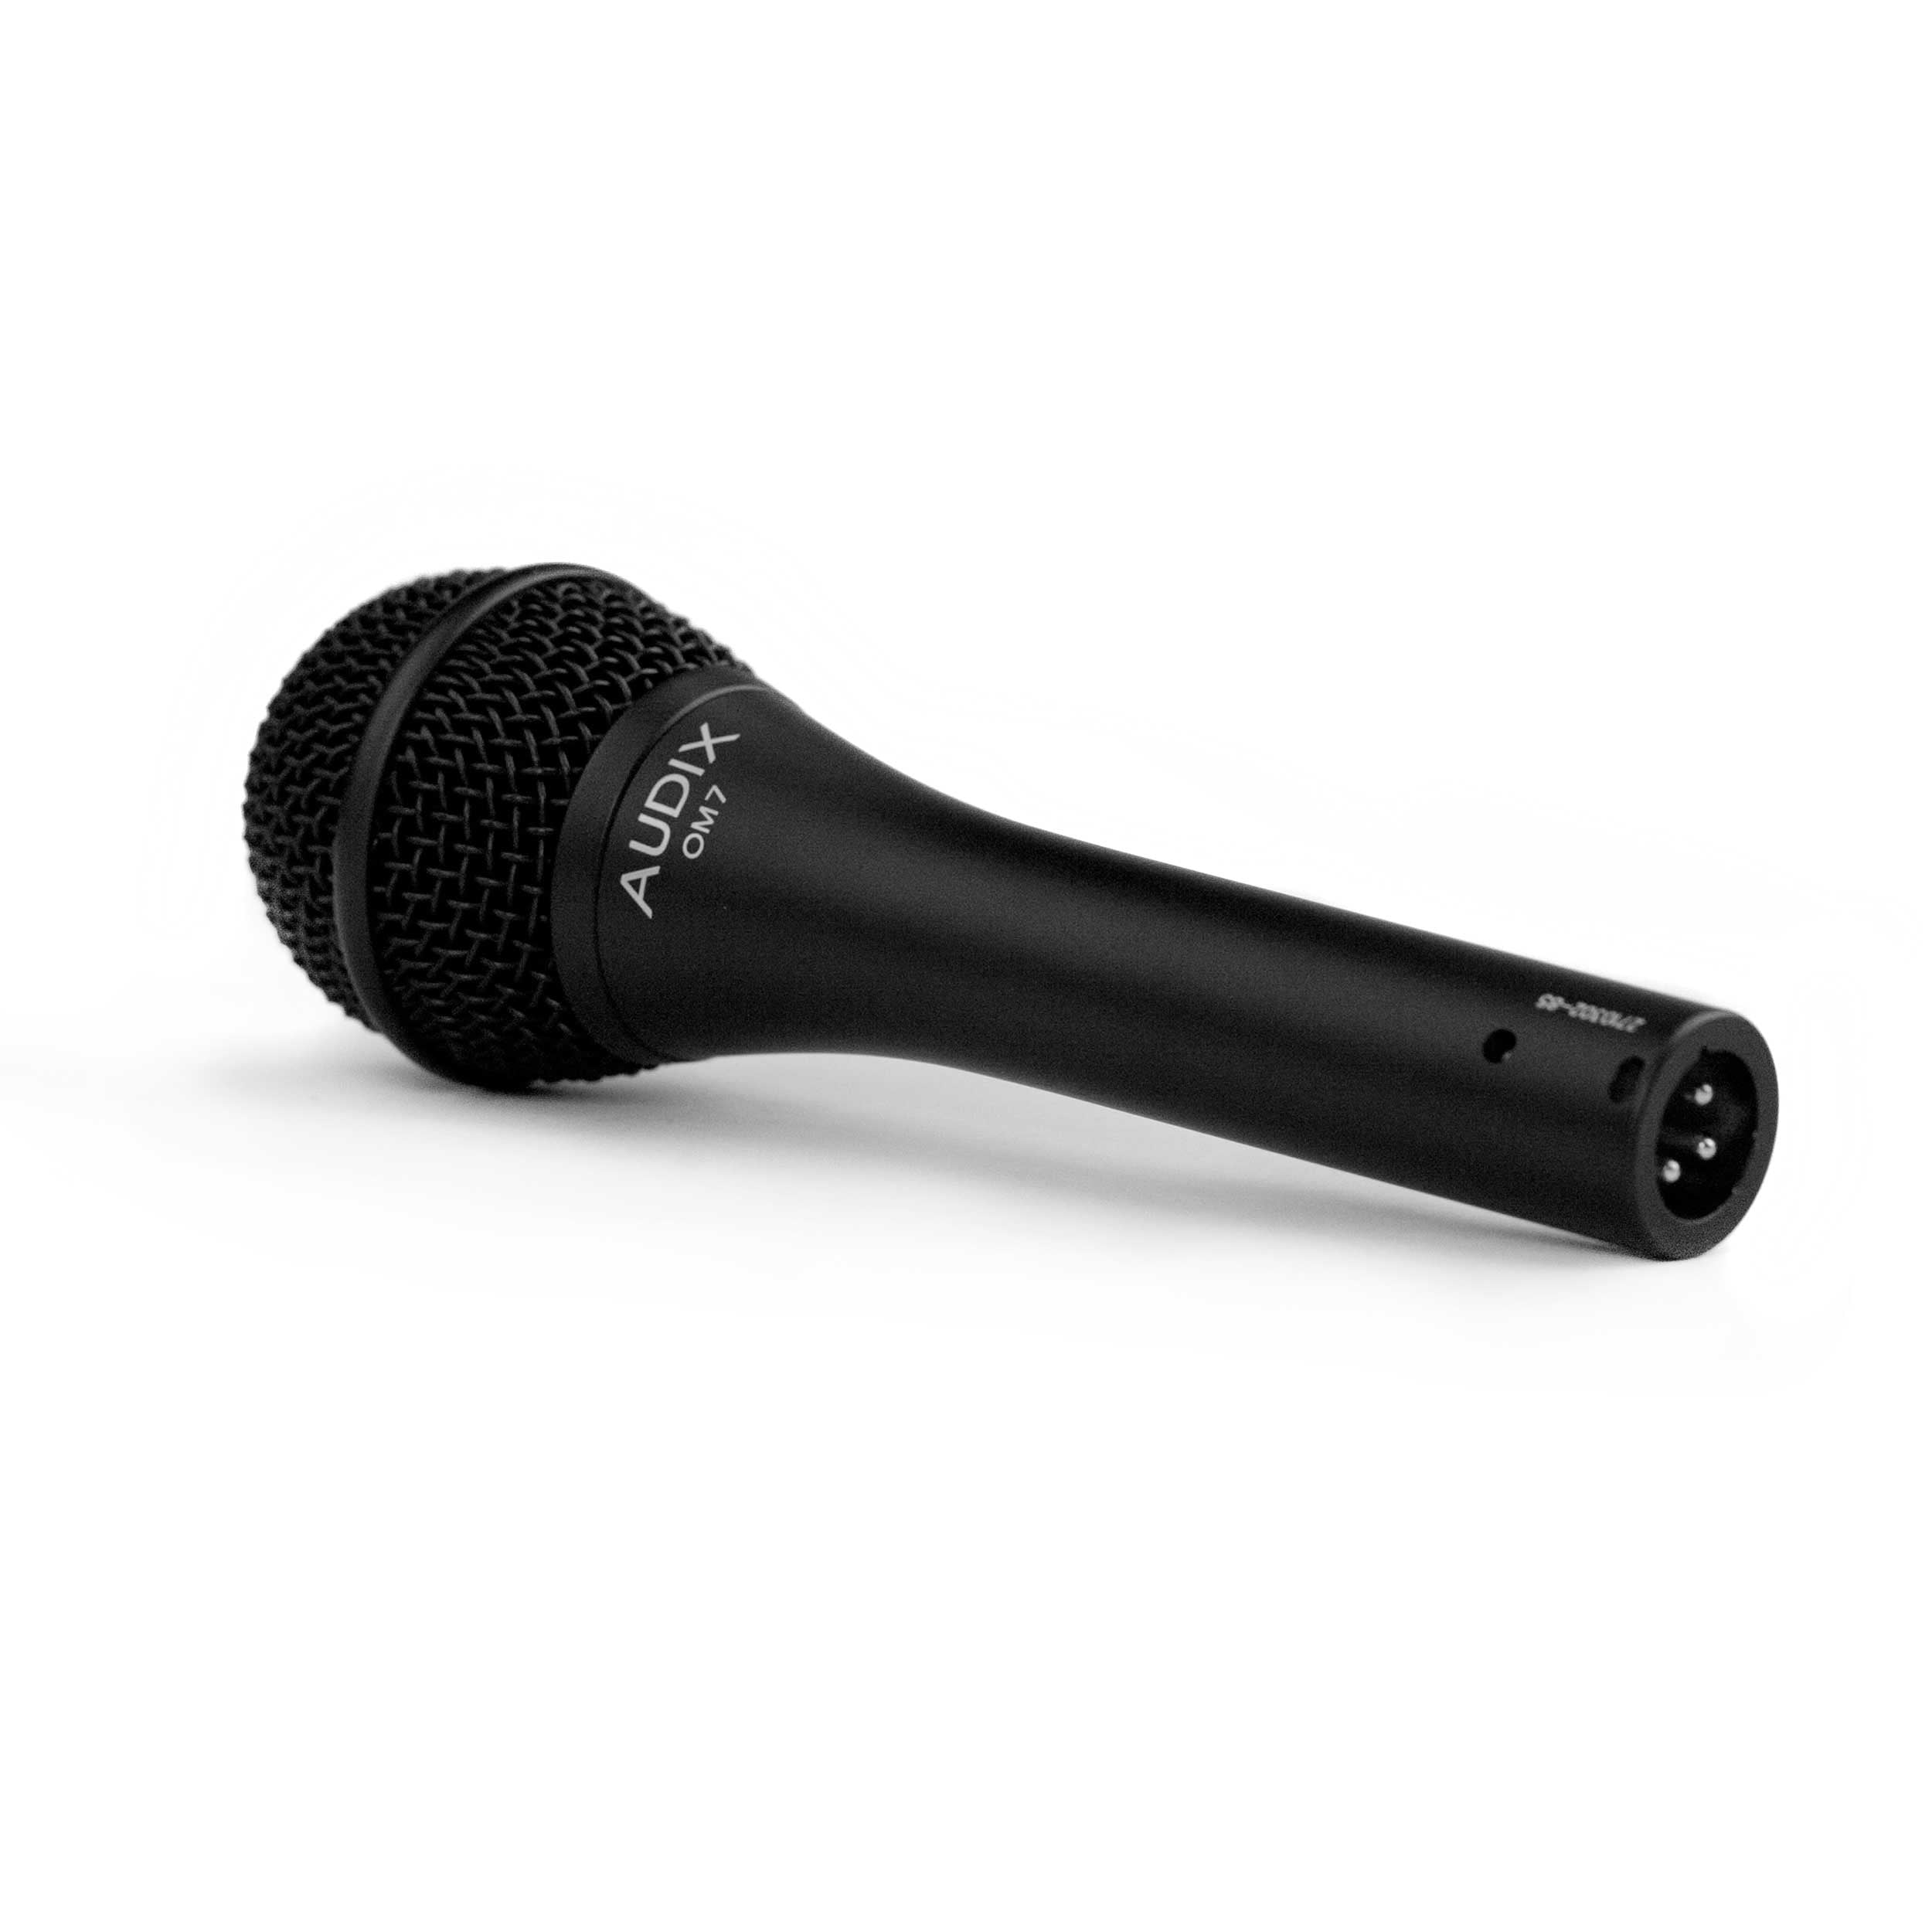 Audix OM-7 Dynamic Vocal Mircrophone